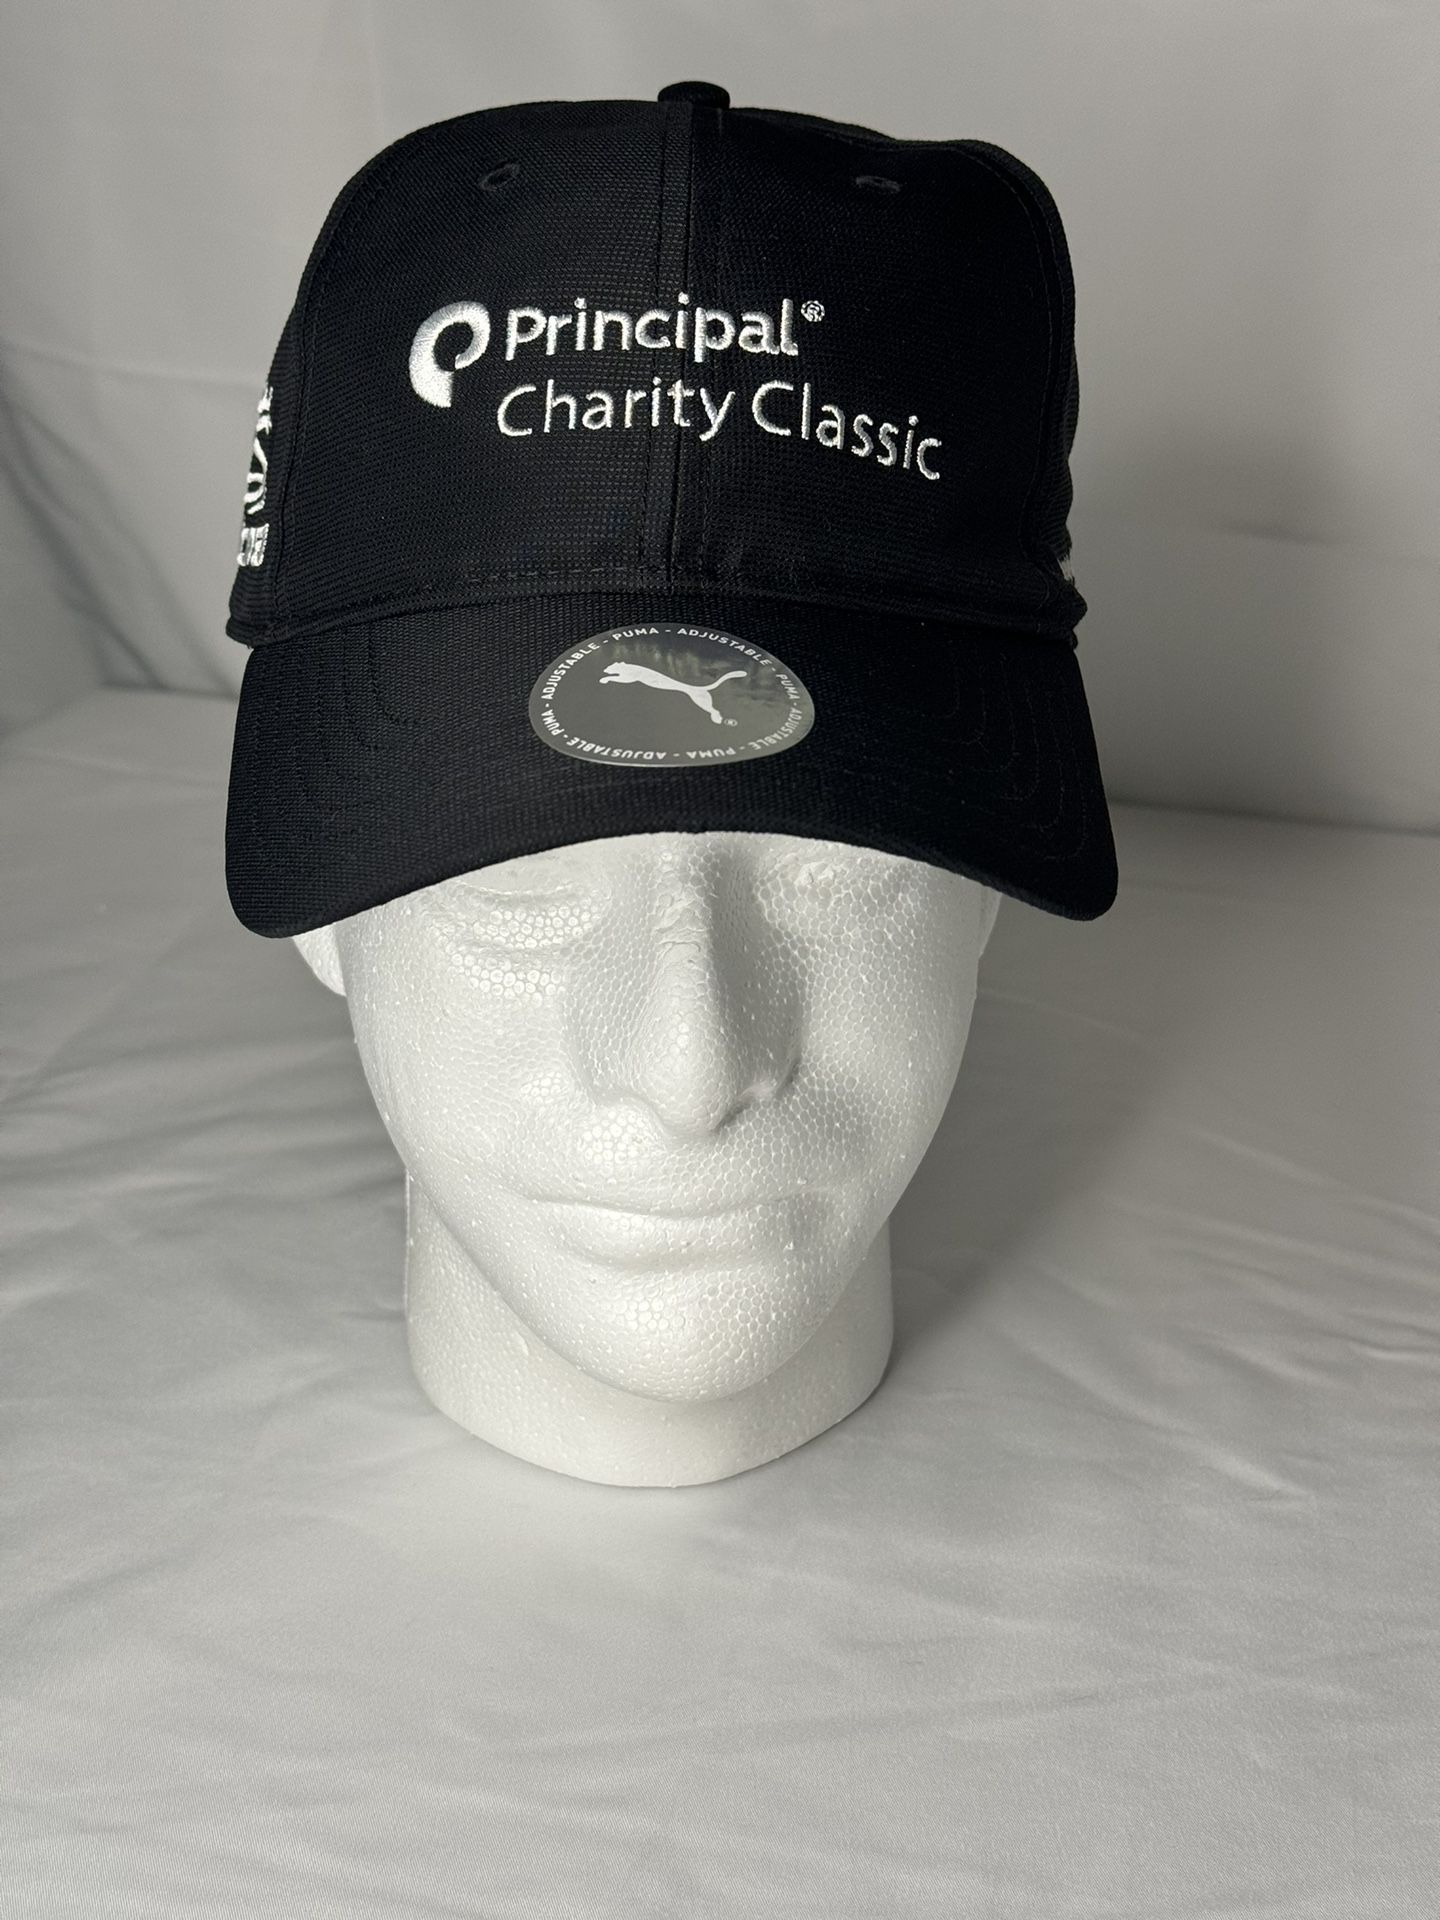 PUMA Principal Charity Classic Golf Hat Adjustable Cobra (BRAND NEW)